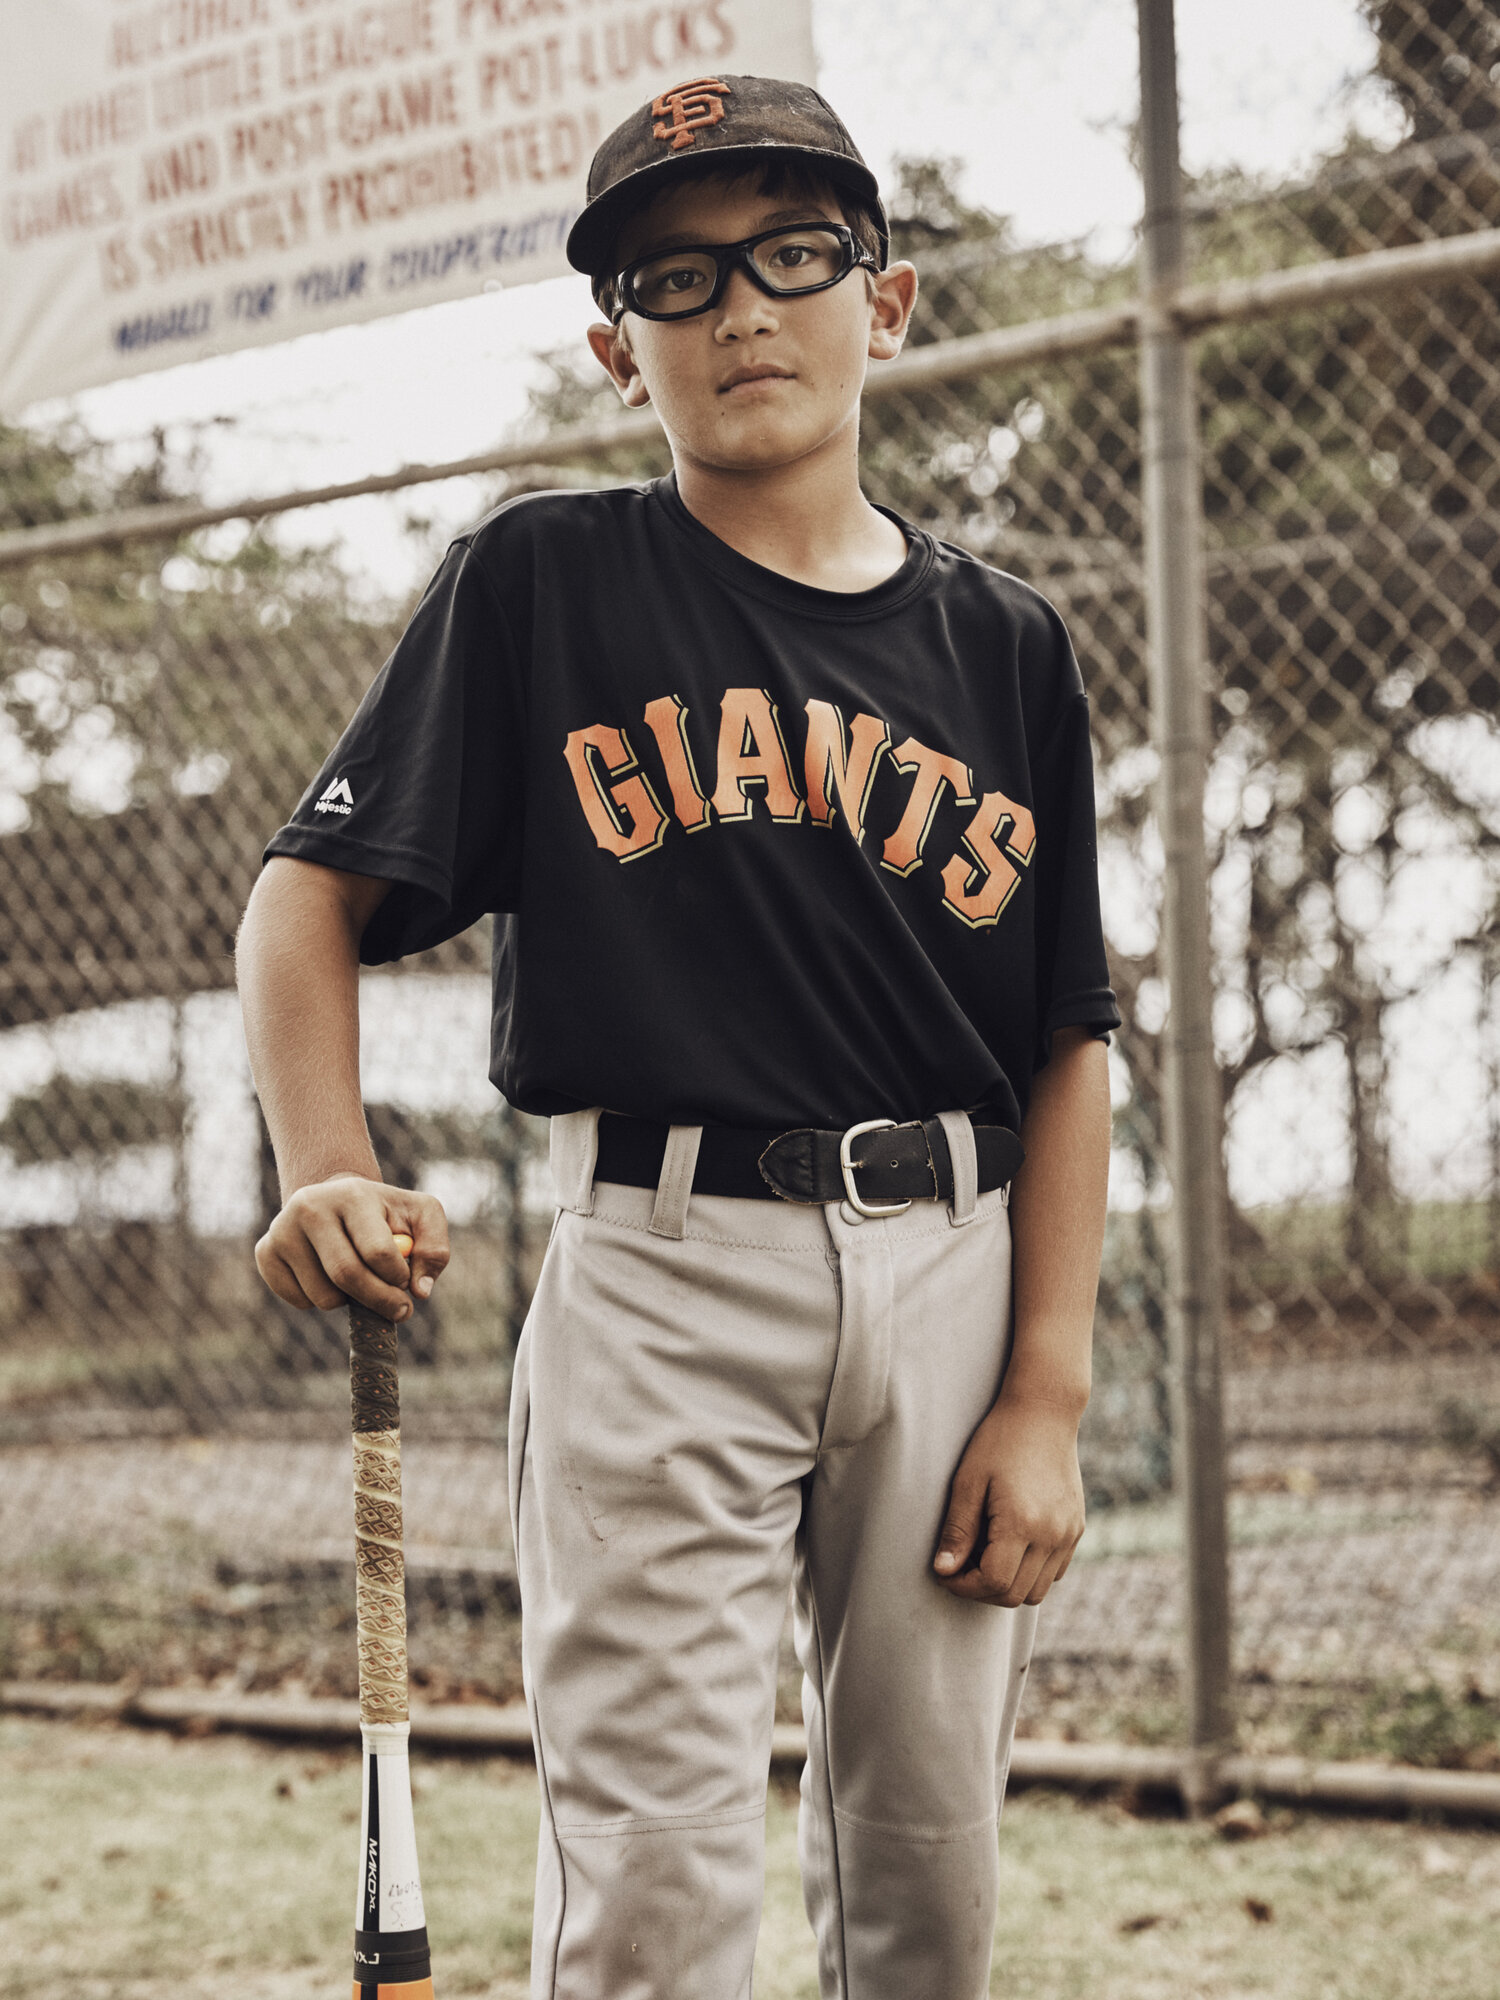 little league baseball uniforms majestic